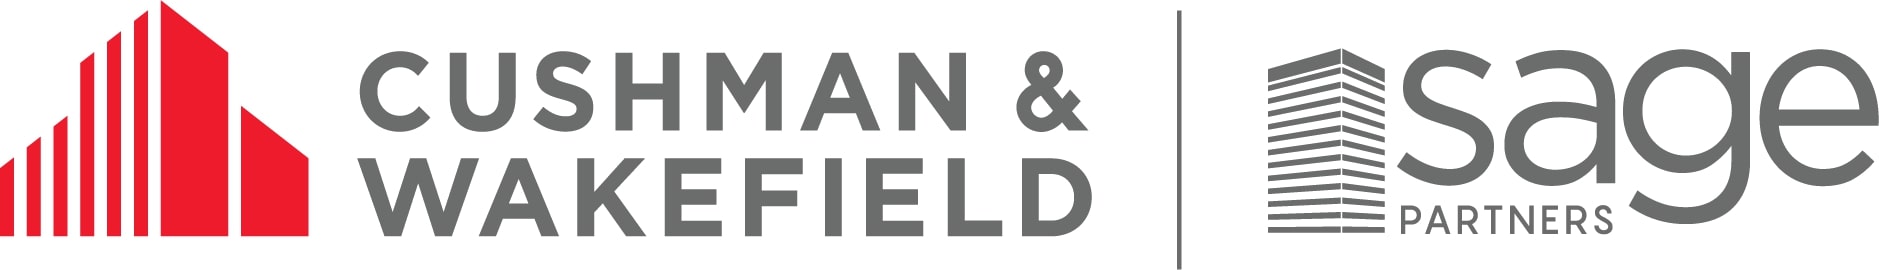 Cushman & Wakefield | Sage Partners (Tier 2)